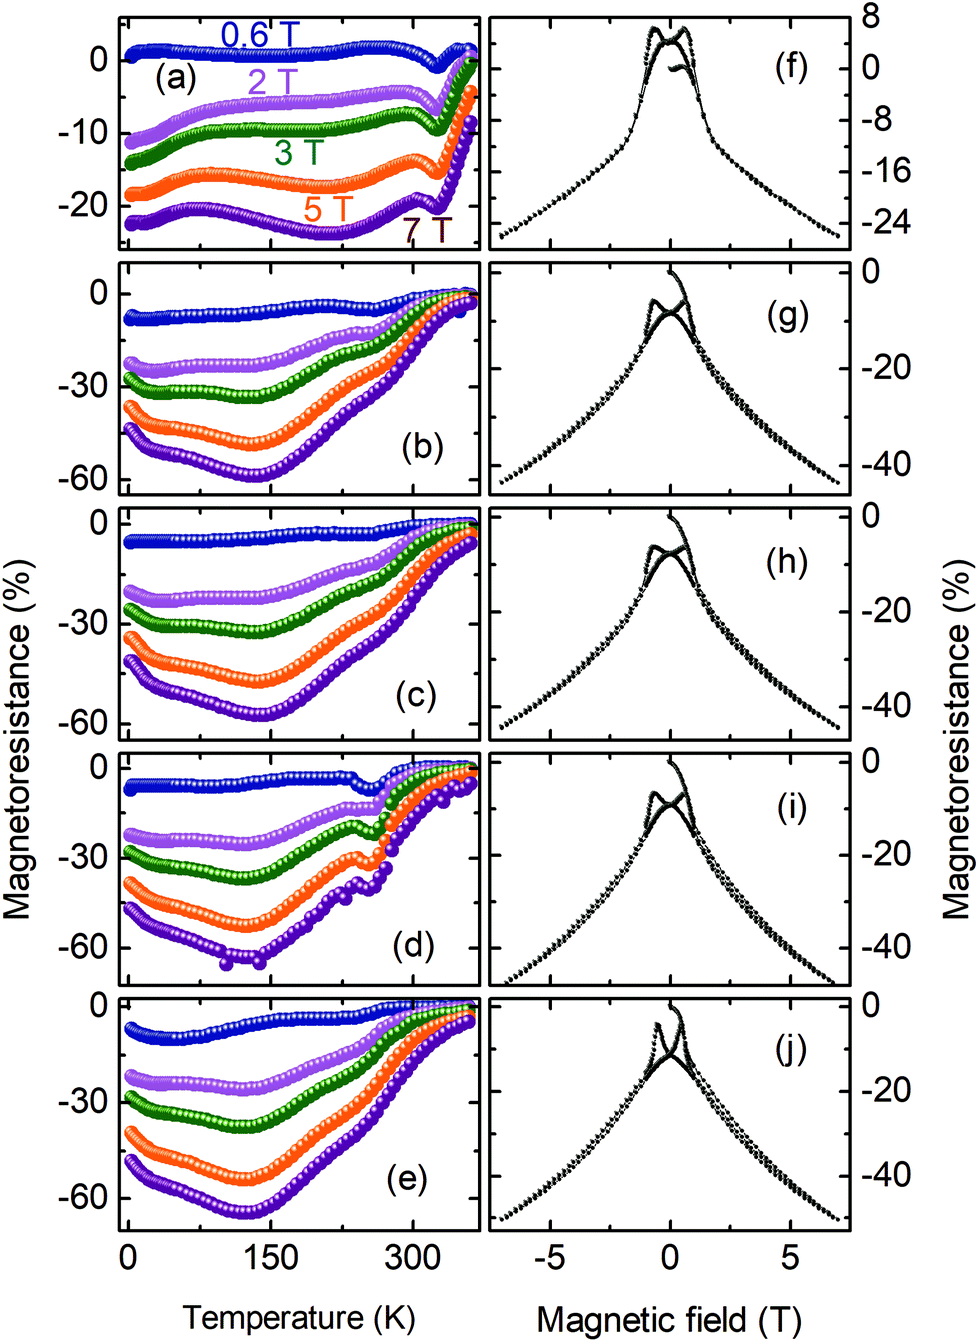 The Suppression Of Spin Orbit Coupling Effect By The Zno Layer Of La 0 7 Sr 0 3 Mno 3 Zno Heterostructures Grown On 001 Oriented Si Restores The Ne Nanoscale Rsc Publishing Doi 10 1039 D0nre